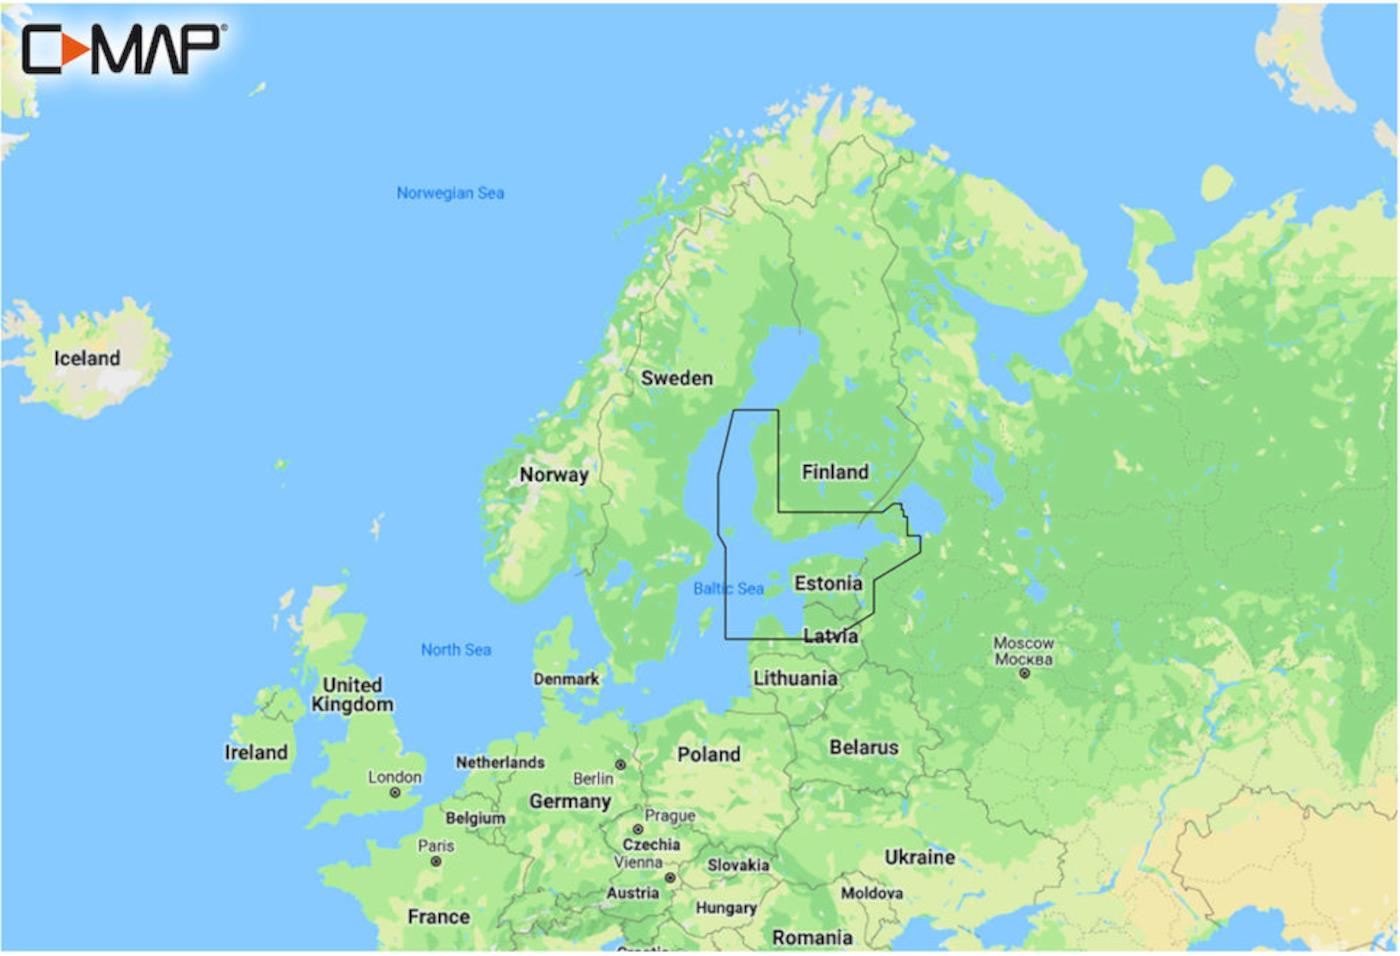 C-MAP Discover Finnland Åland Estland EN-Y212